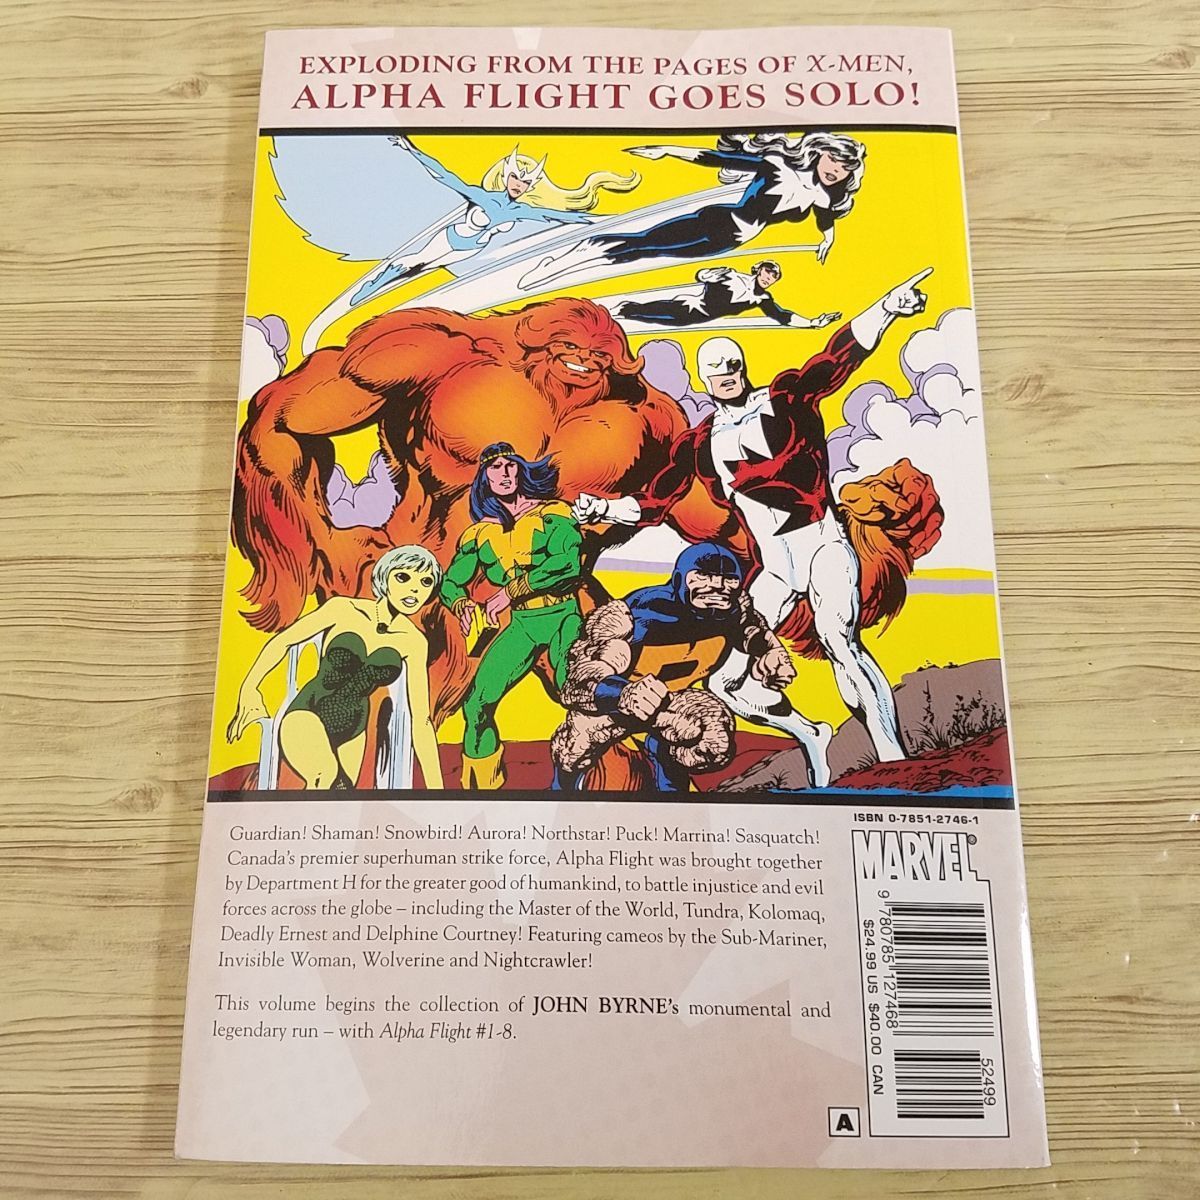  American Comics [MARVEL Alpha полет * Classic ALPHA FLIGHT CLASSIC 1]ma-veru иностранная книга английский язык X-MEN